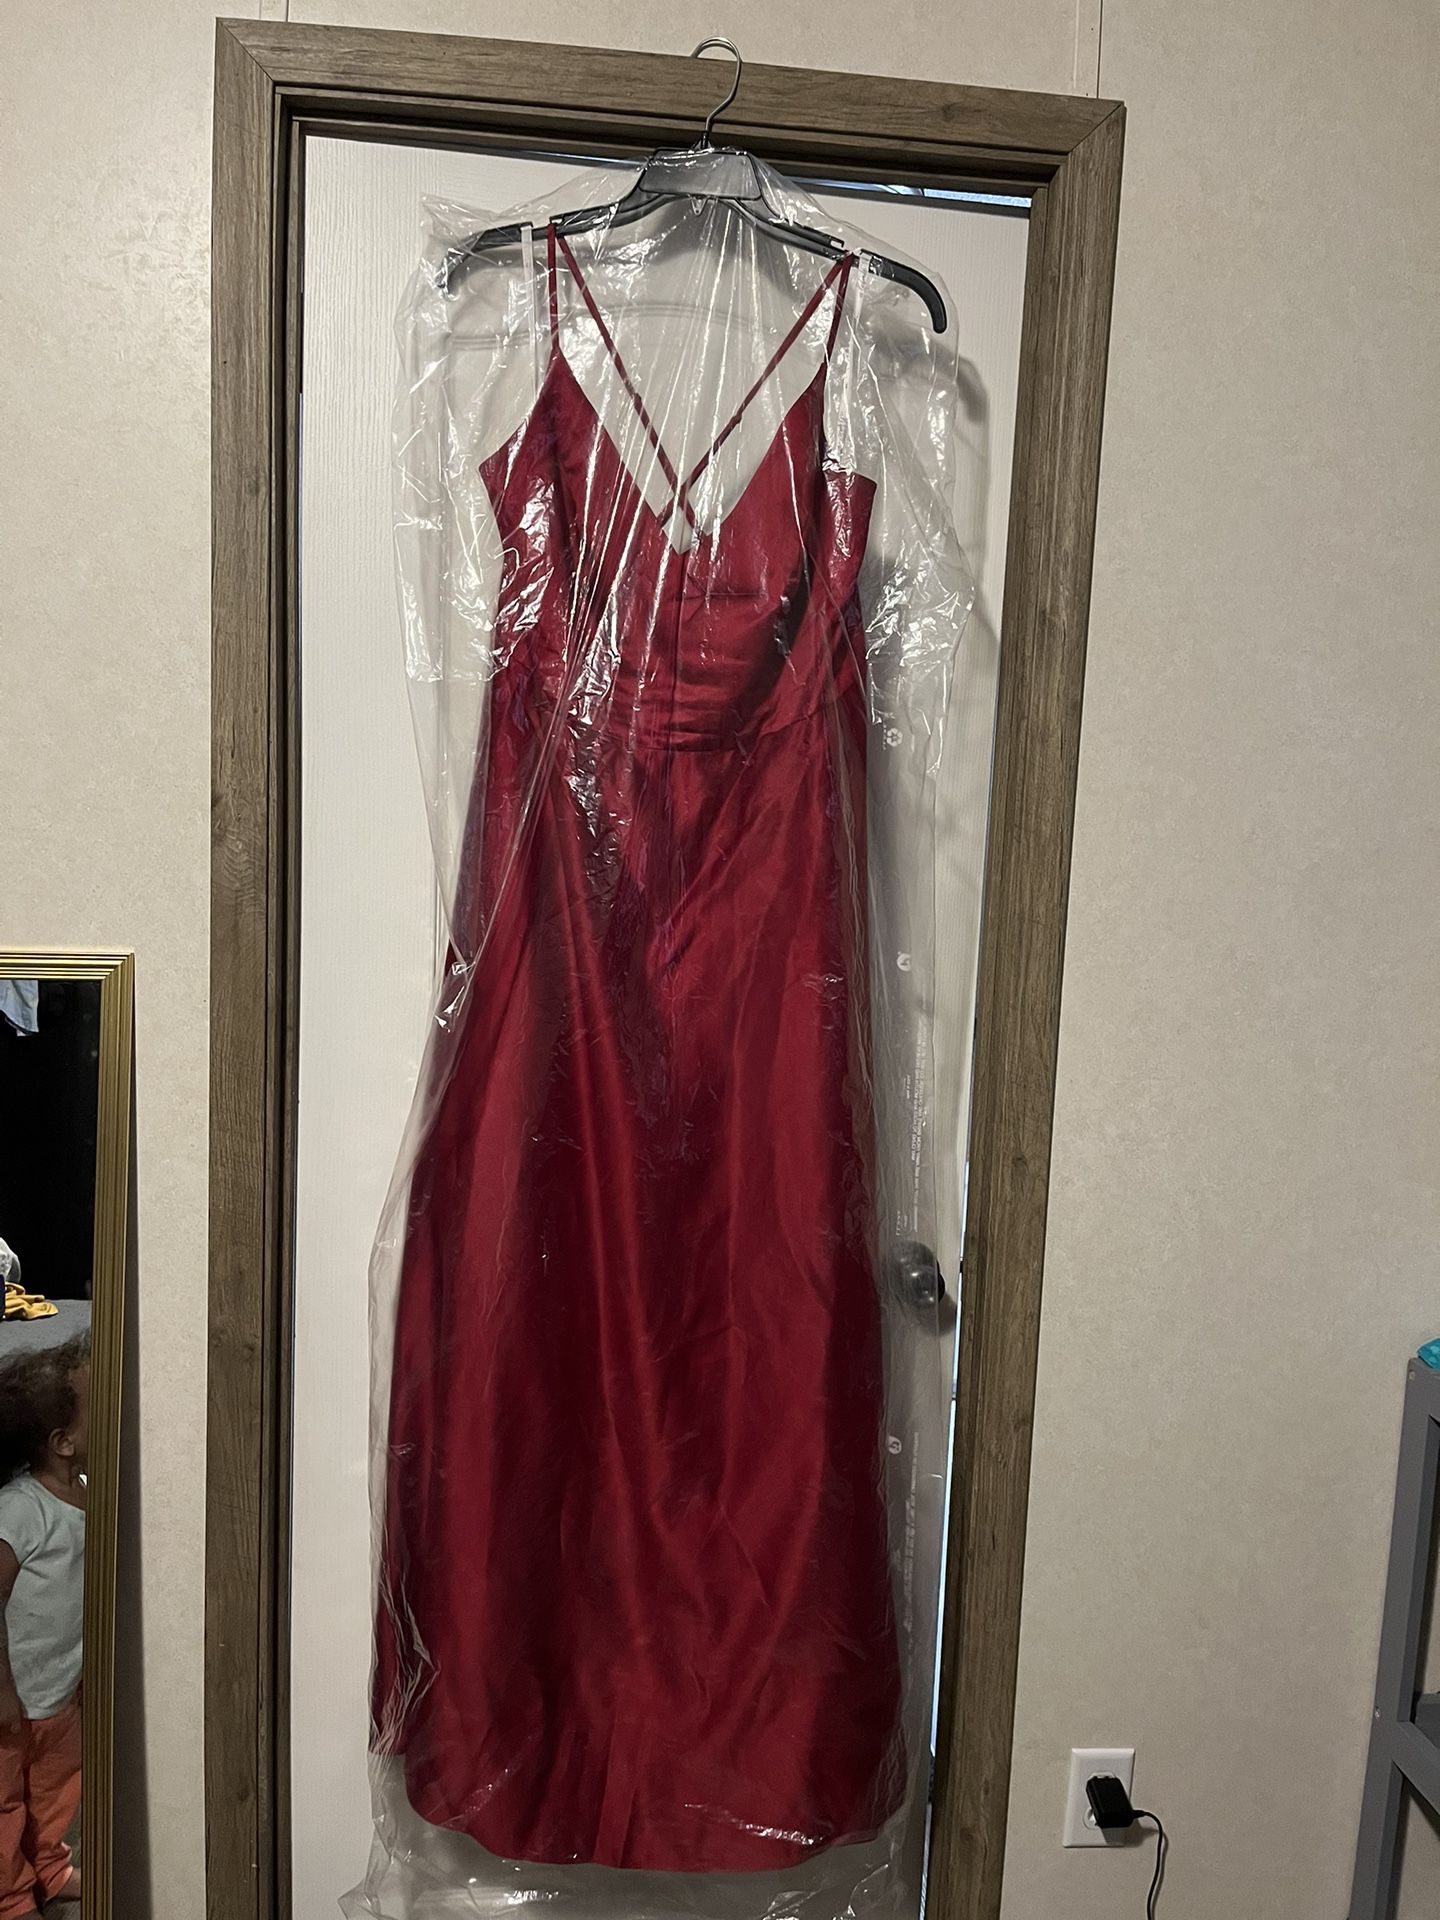 David’s Bridal Dress Size 20